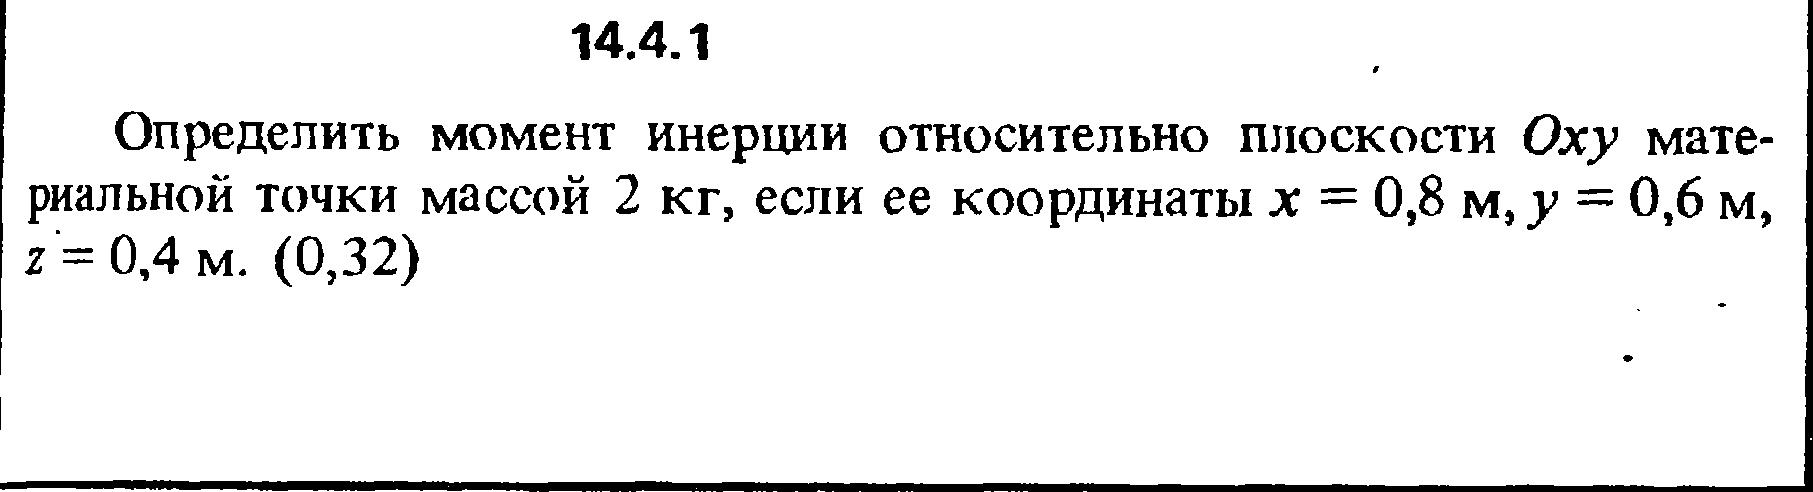 Решение задачи 14.4.1 из сборника Кепе О.Е. 1989 года